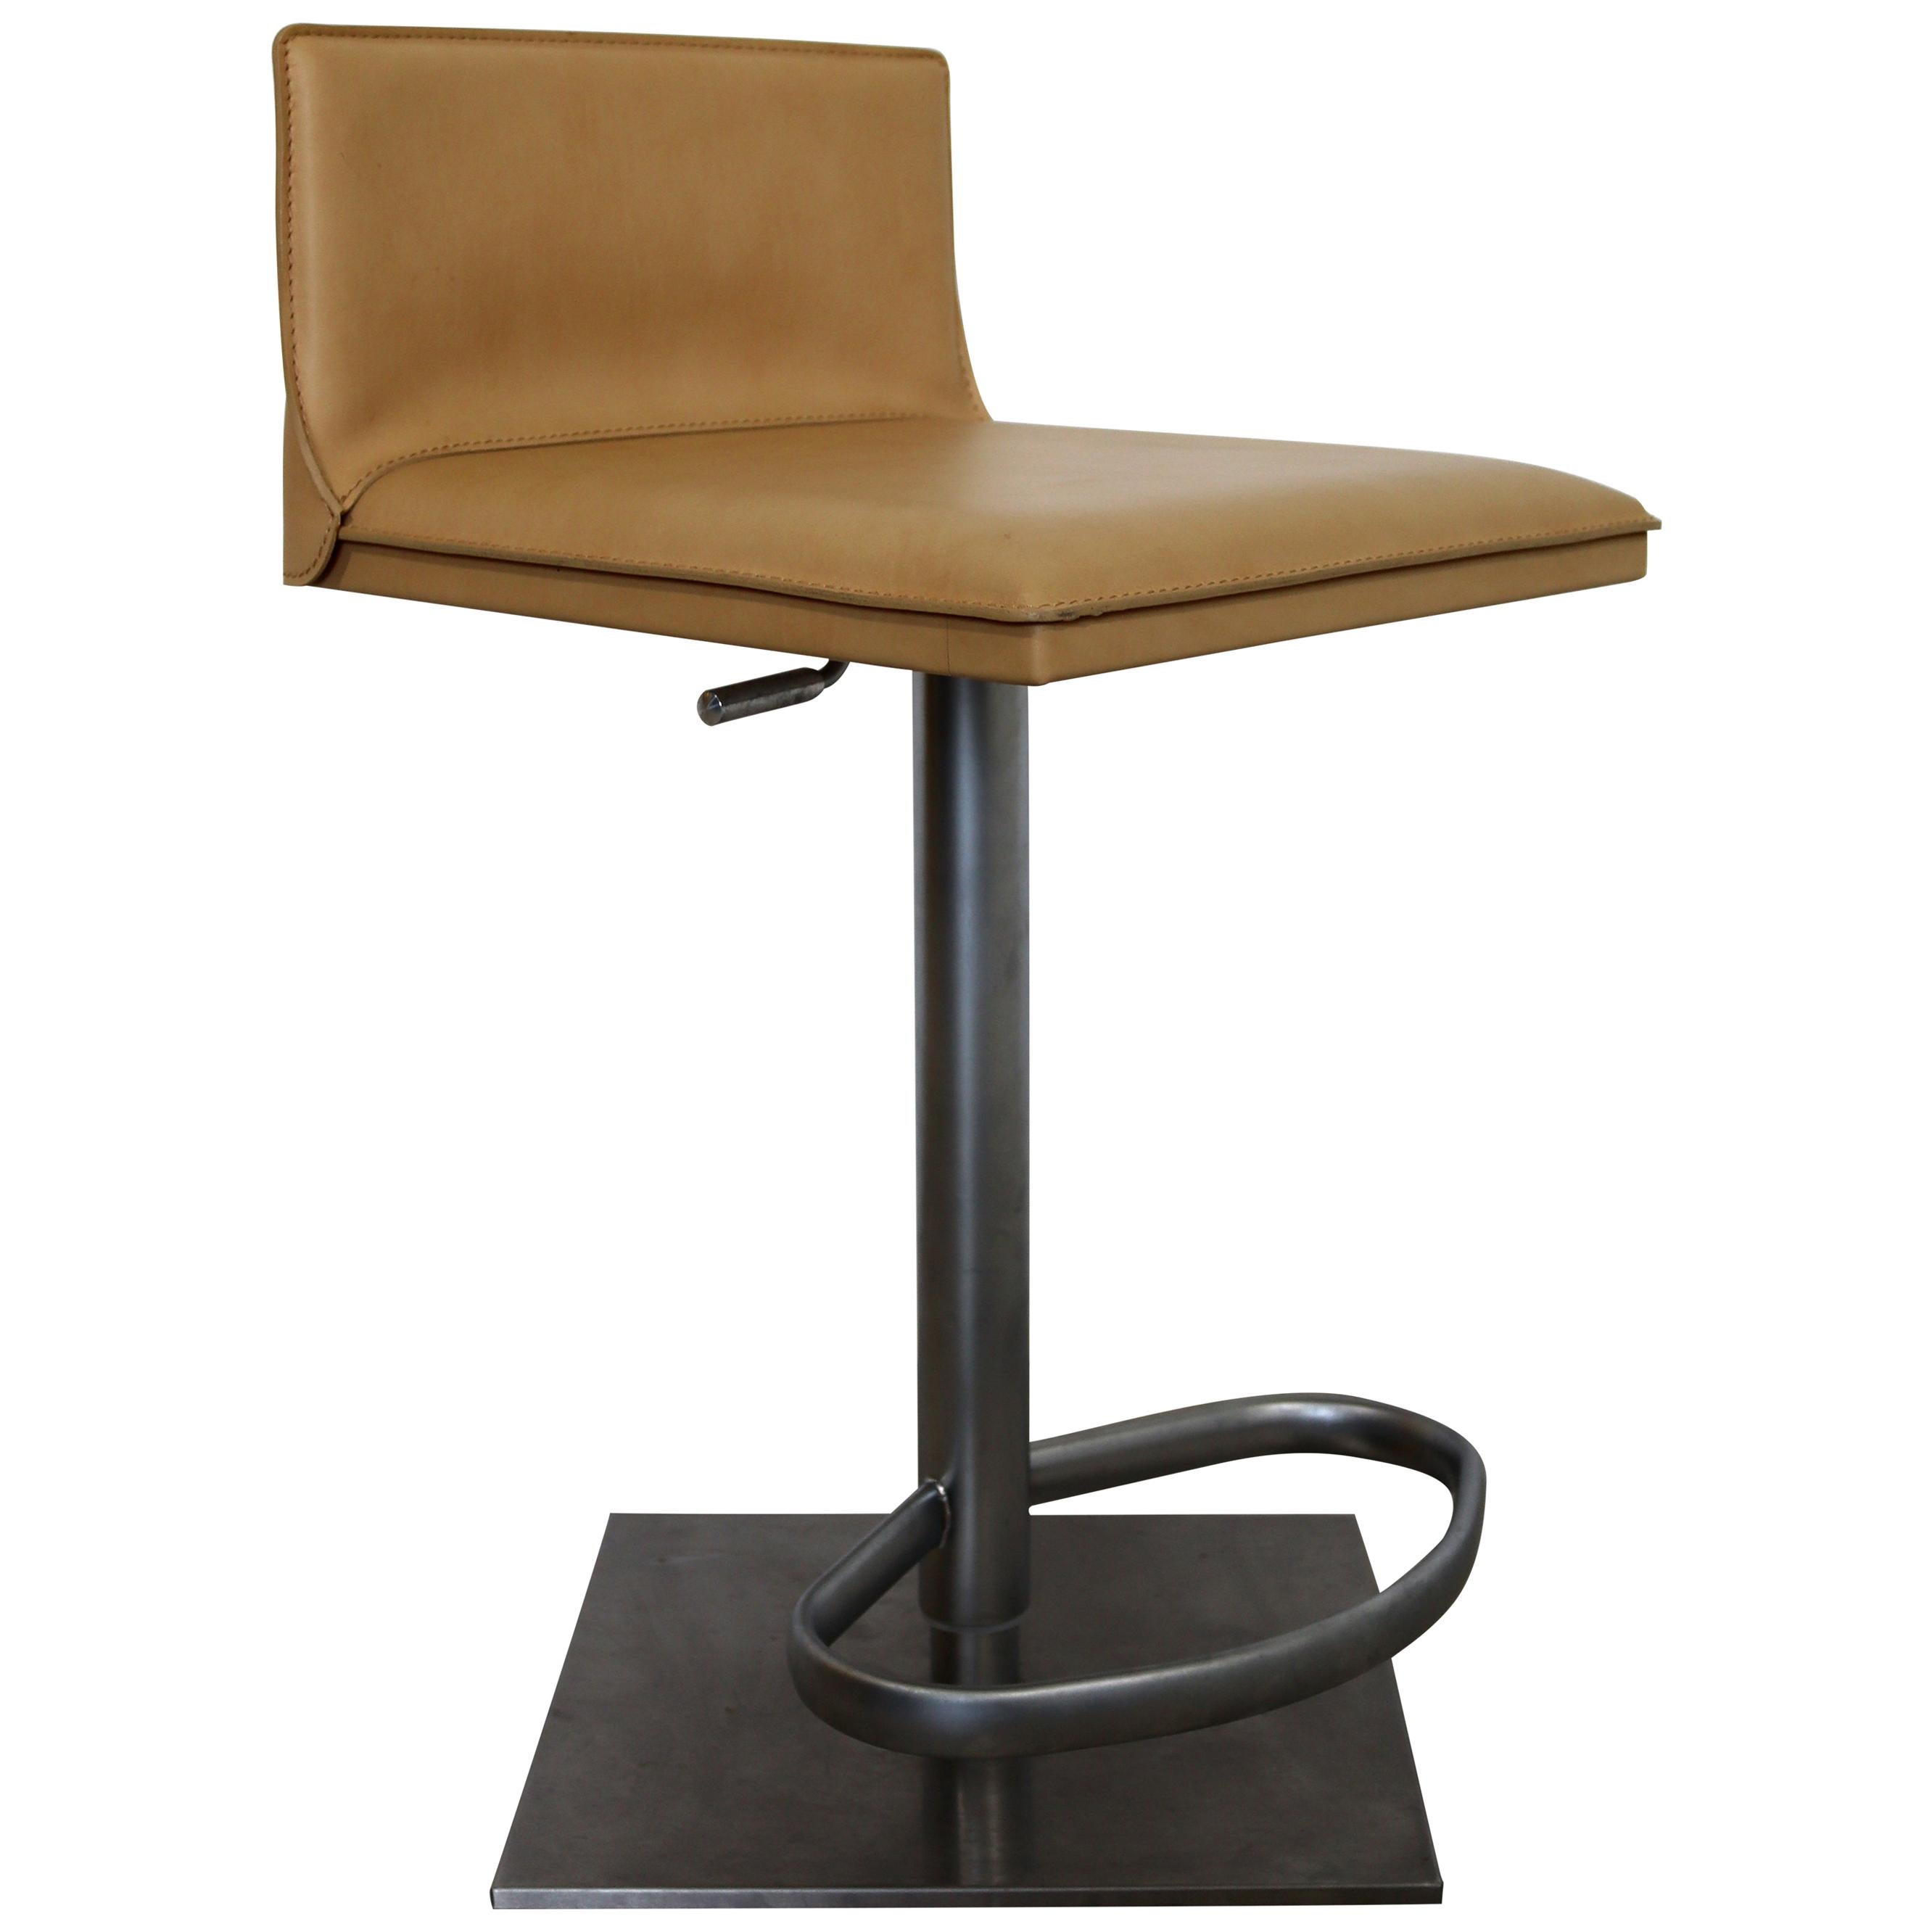 Frag Leather - 17 For Sale on 1stDibs | frag chairs, frag chair 